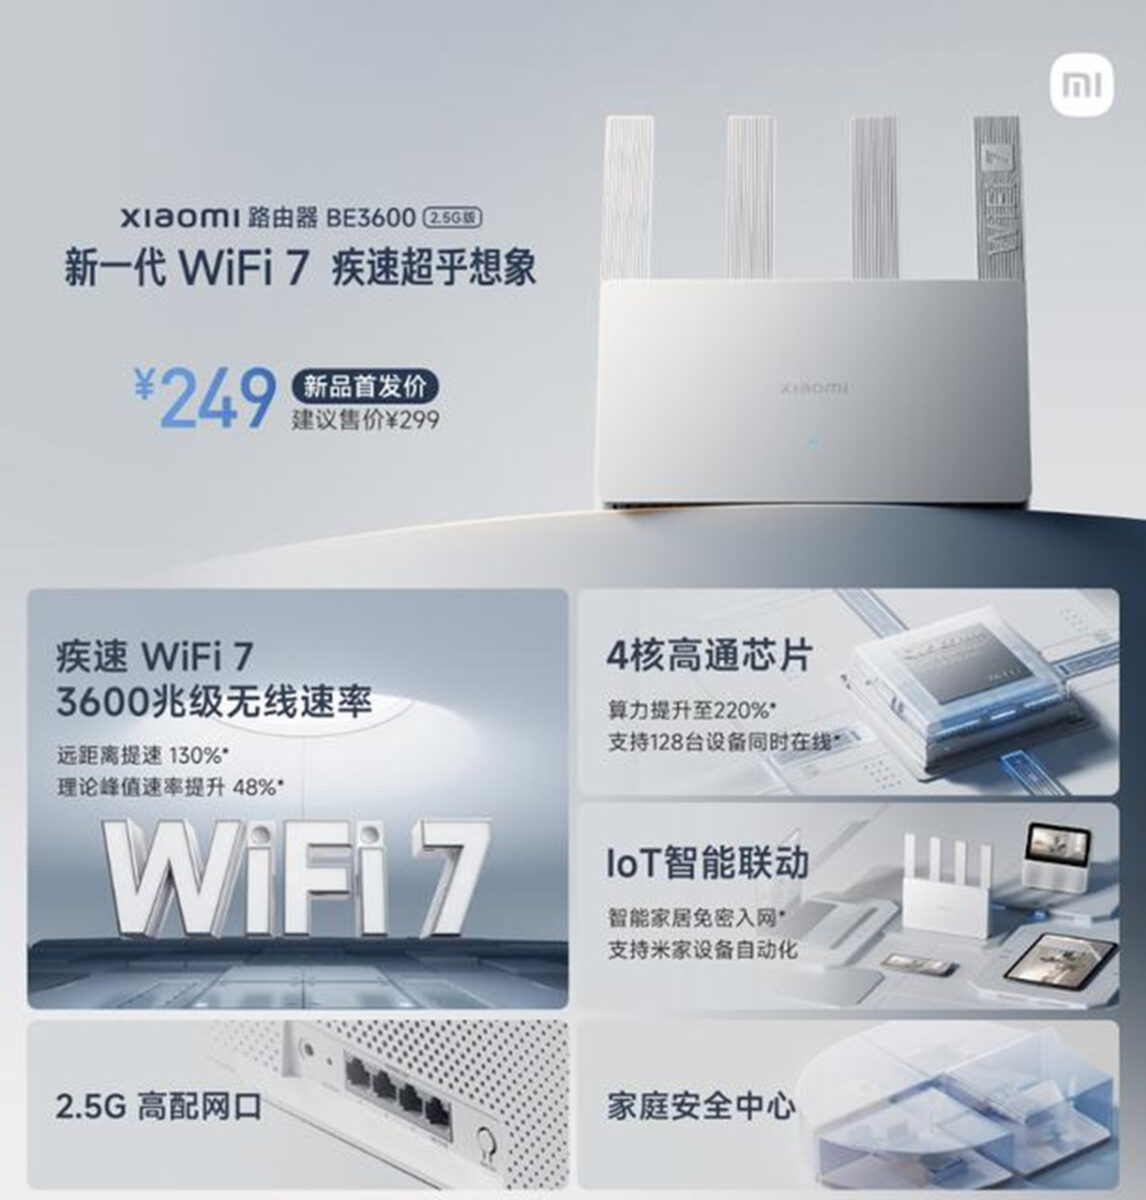 xiaomi be3600 wi-fi 7 router